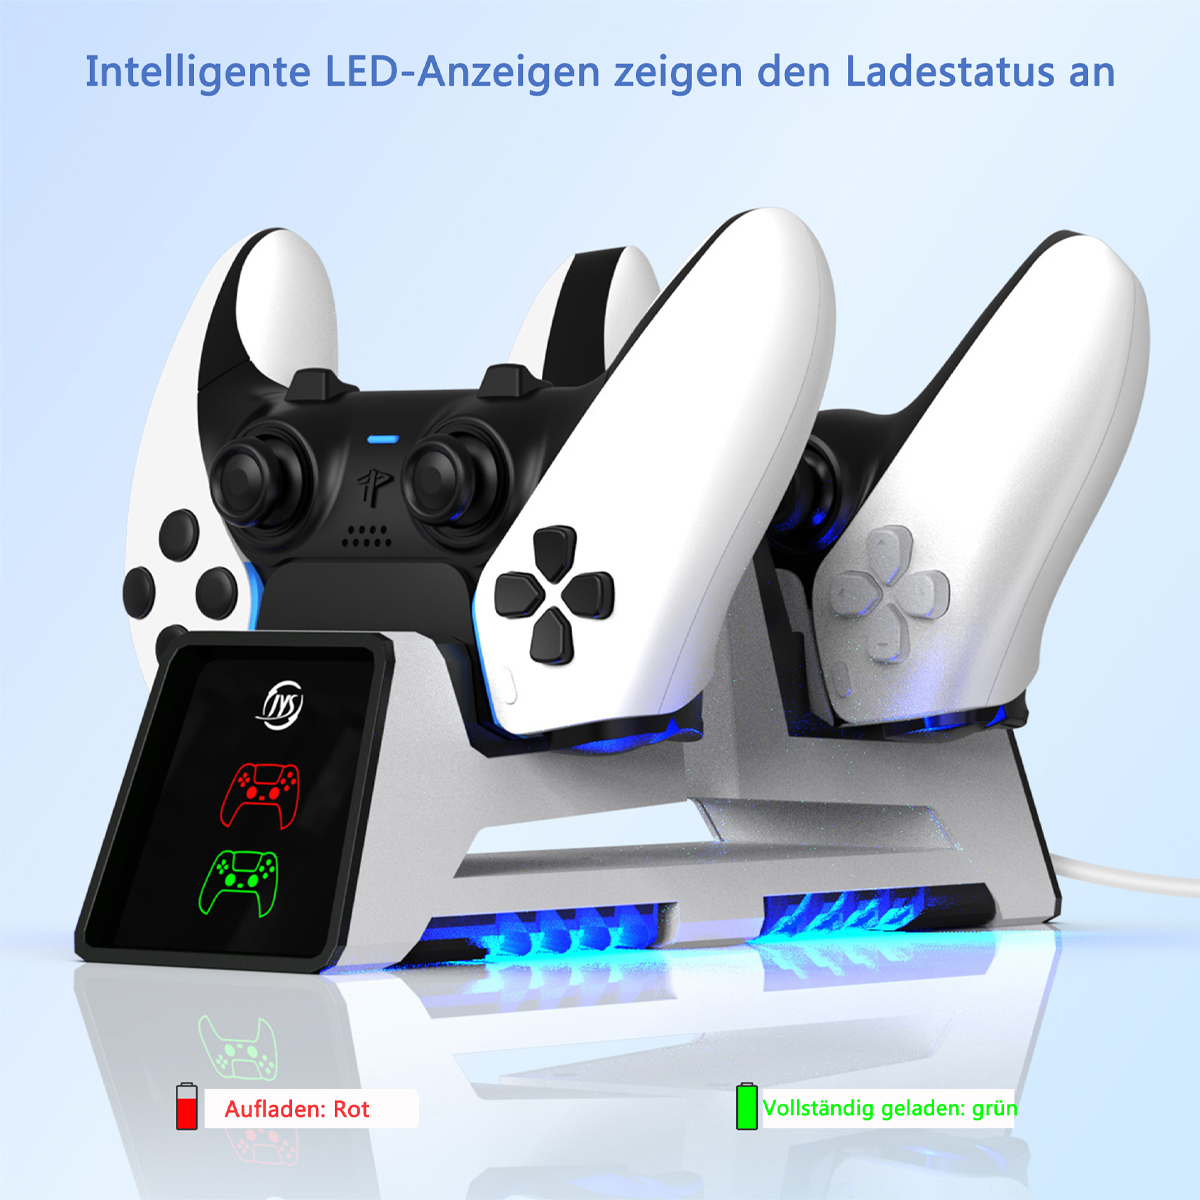 RESPIEL PS5 multifunktionale Gamepad-Ladestation,für PS Controller VR2 Ladestation, grau Controller-Ladestation